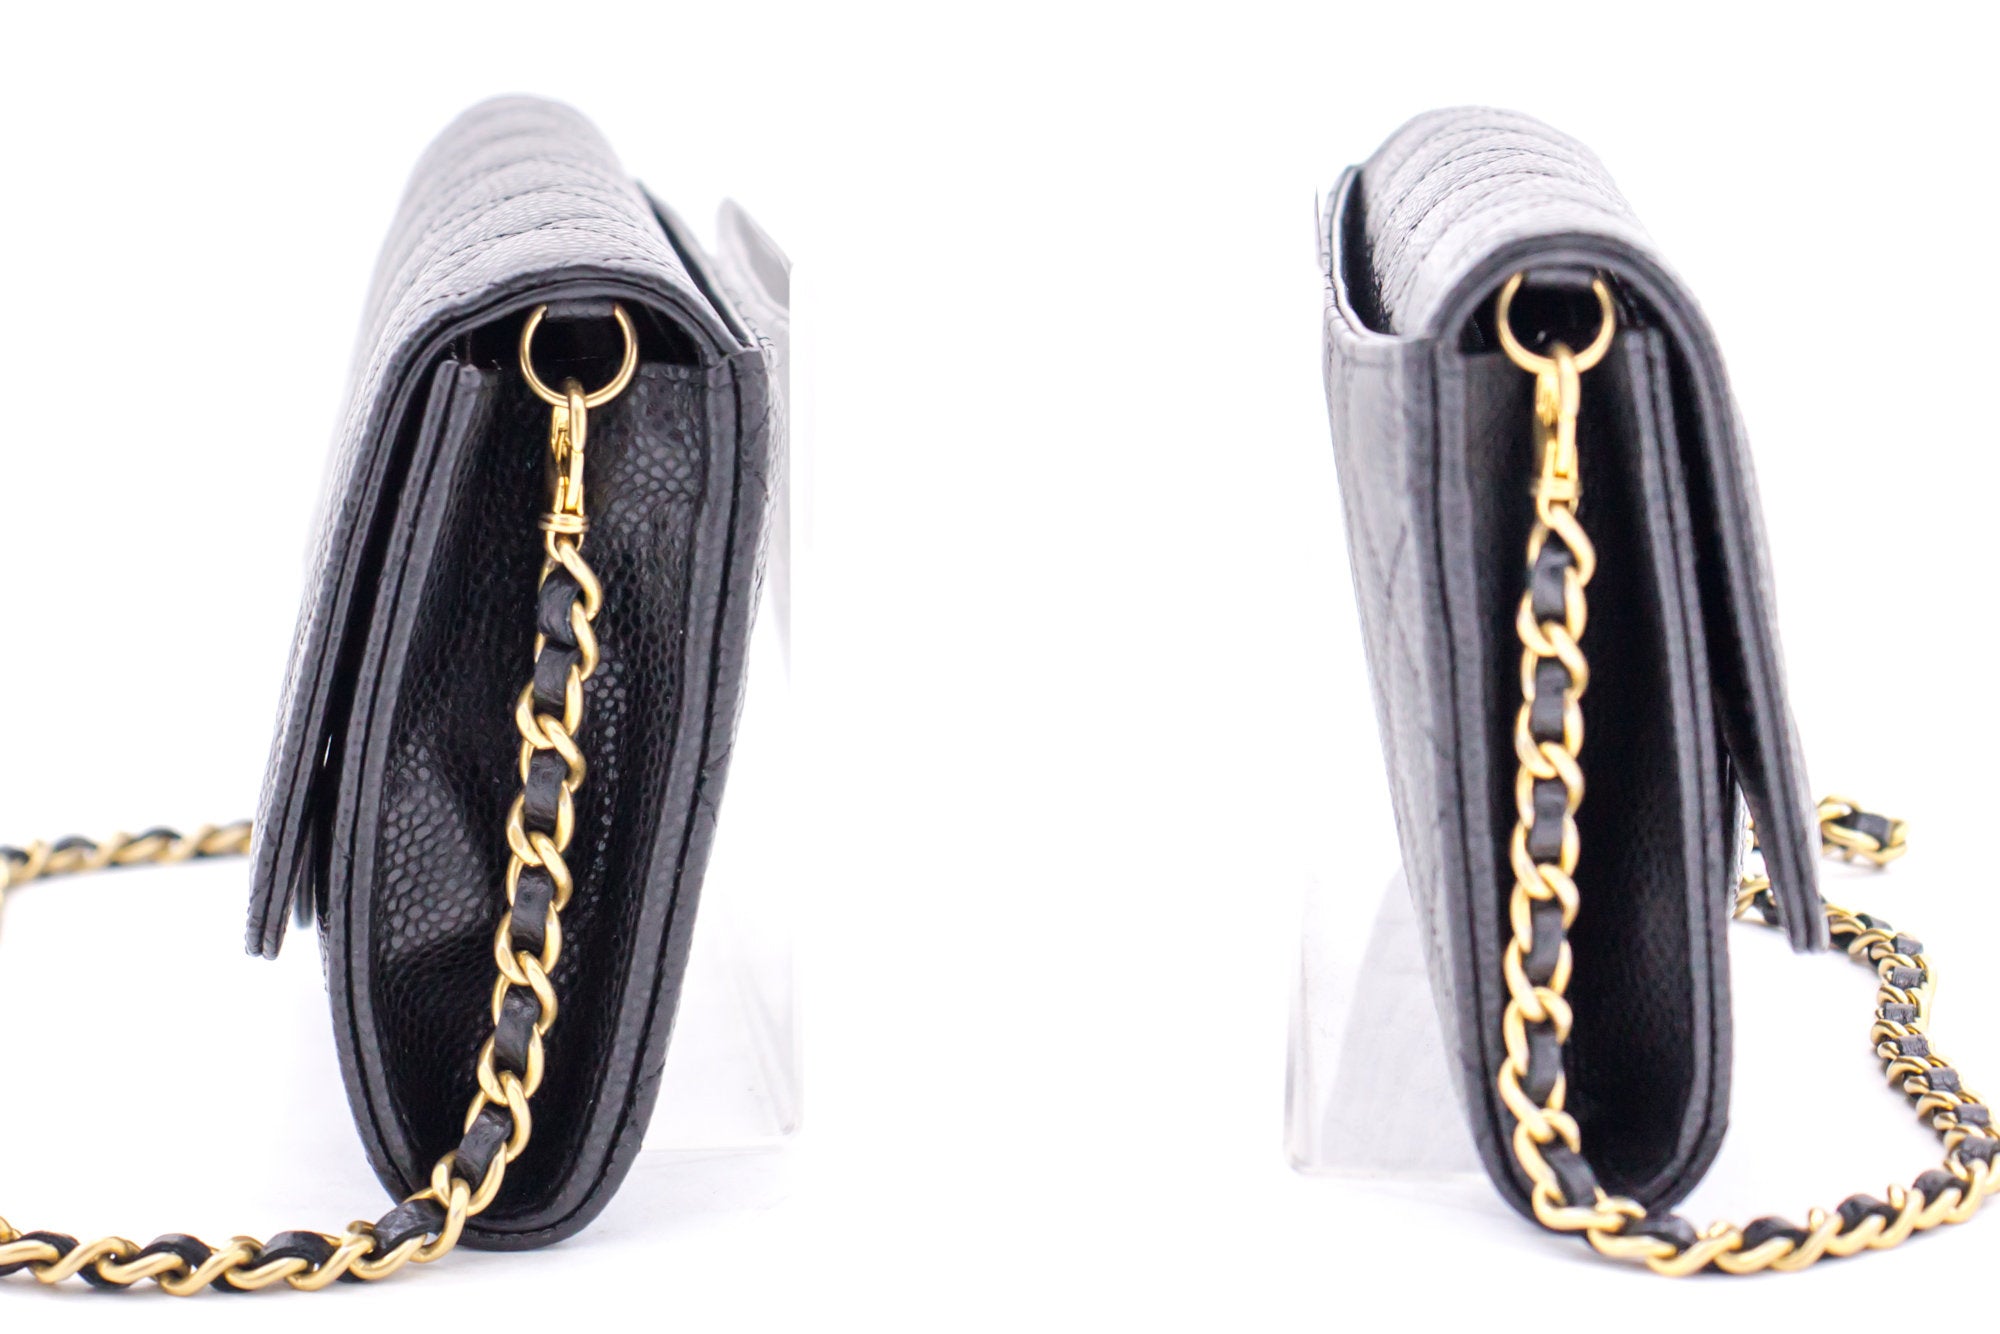 CHANEL Caviar Wallet On Chain WOC Black Shoulder Bag Clutch Purse